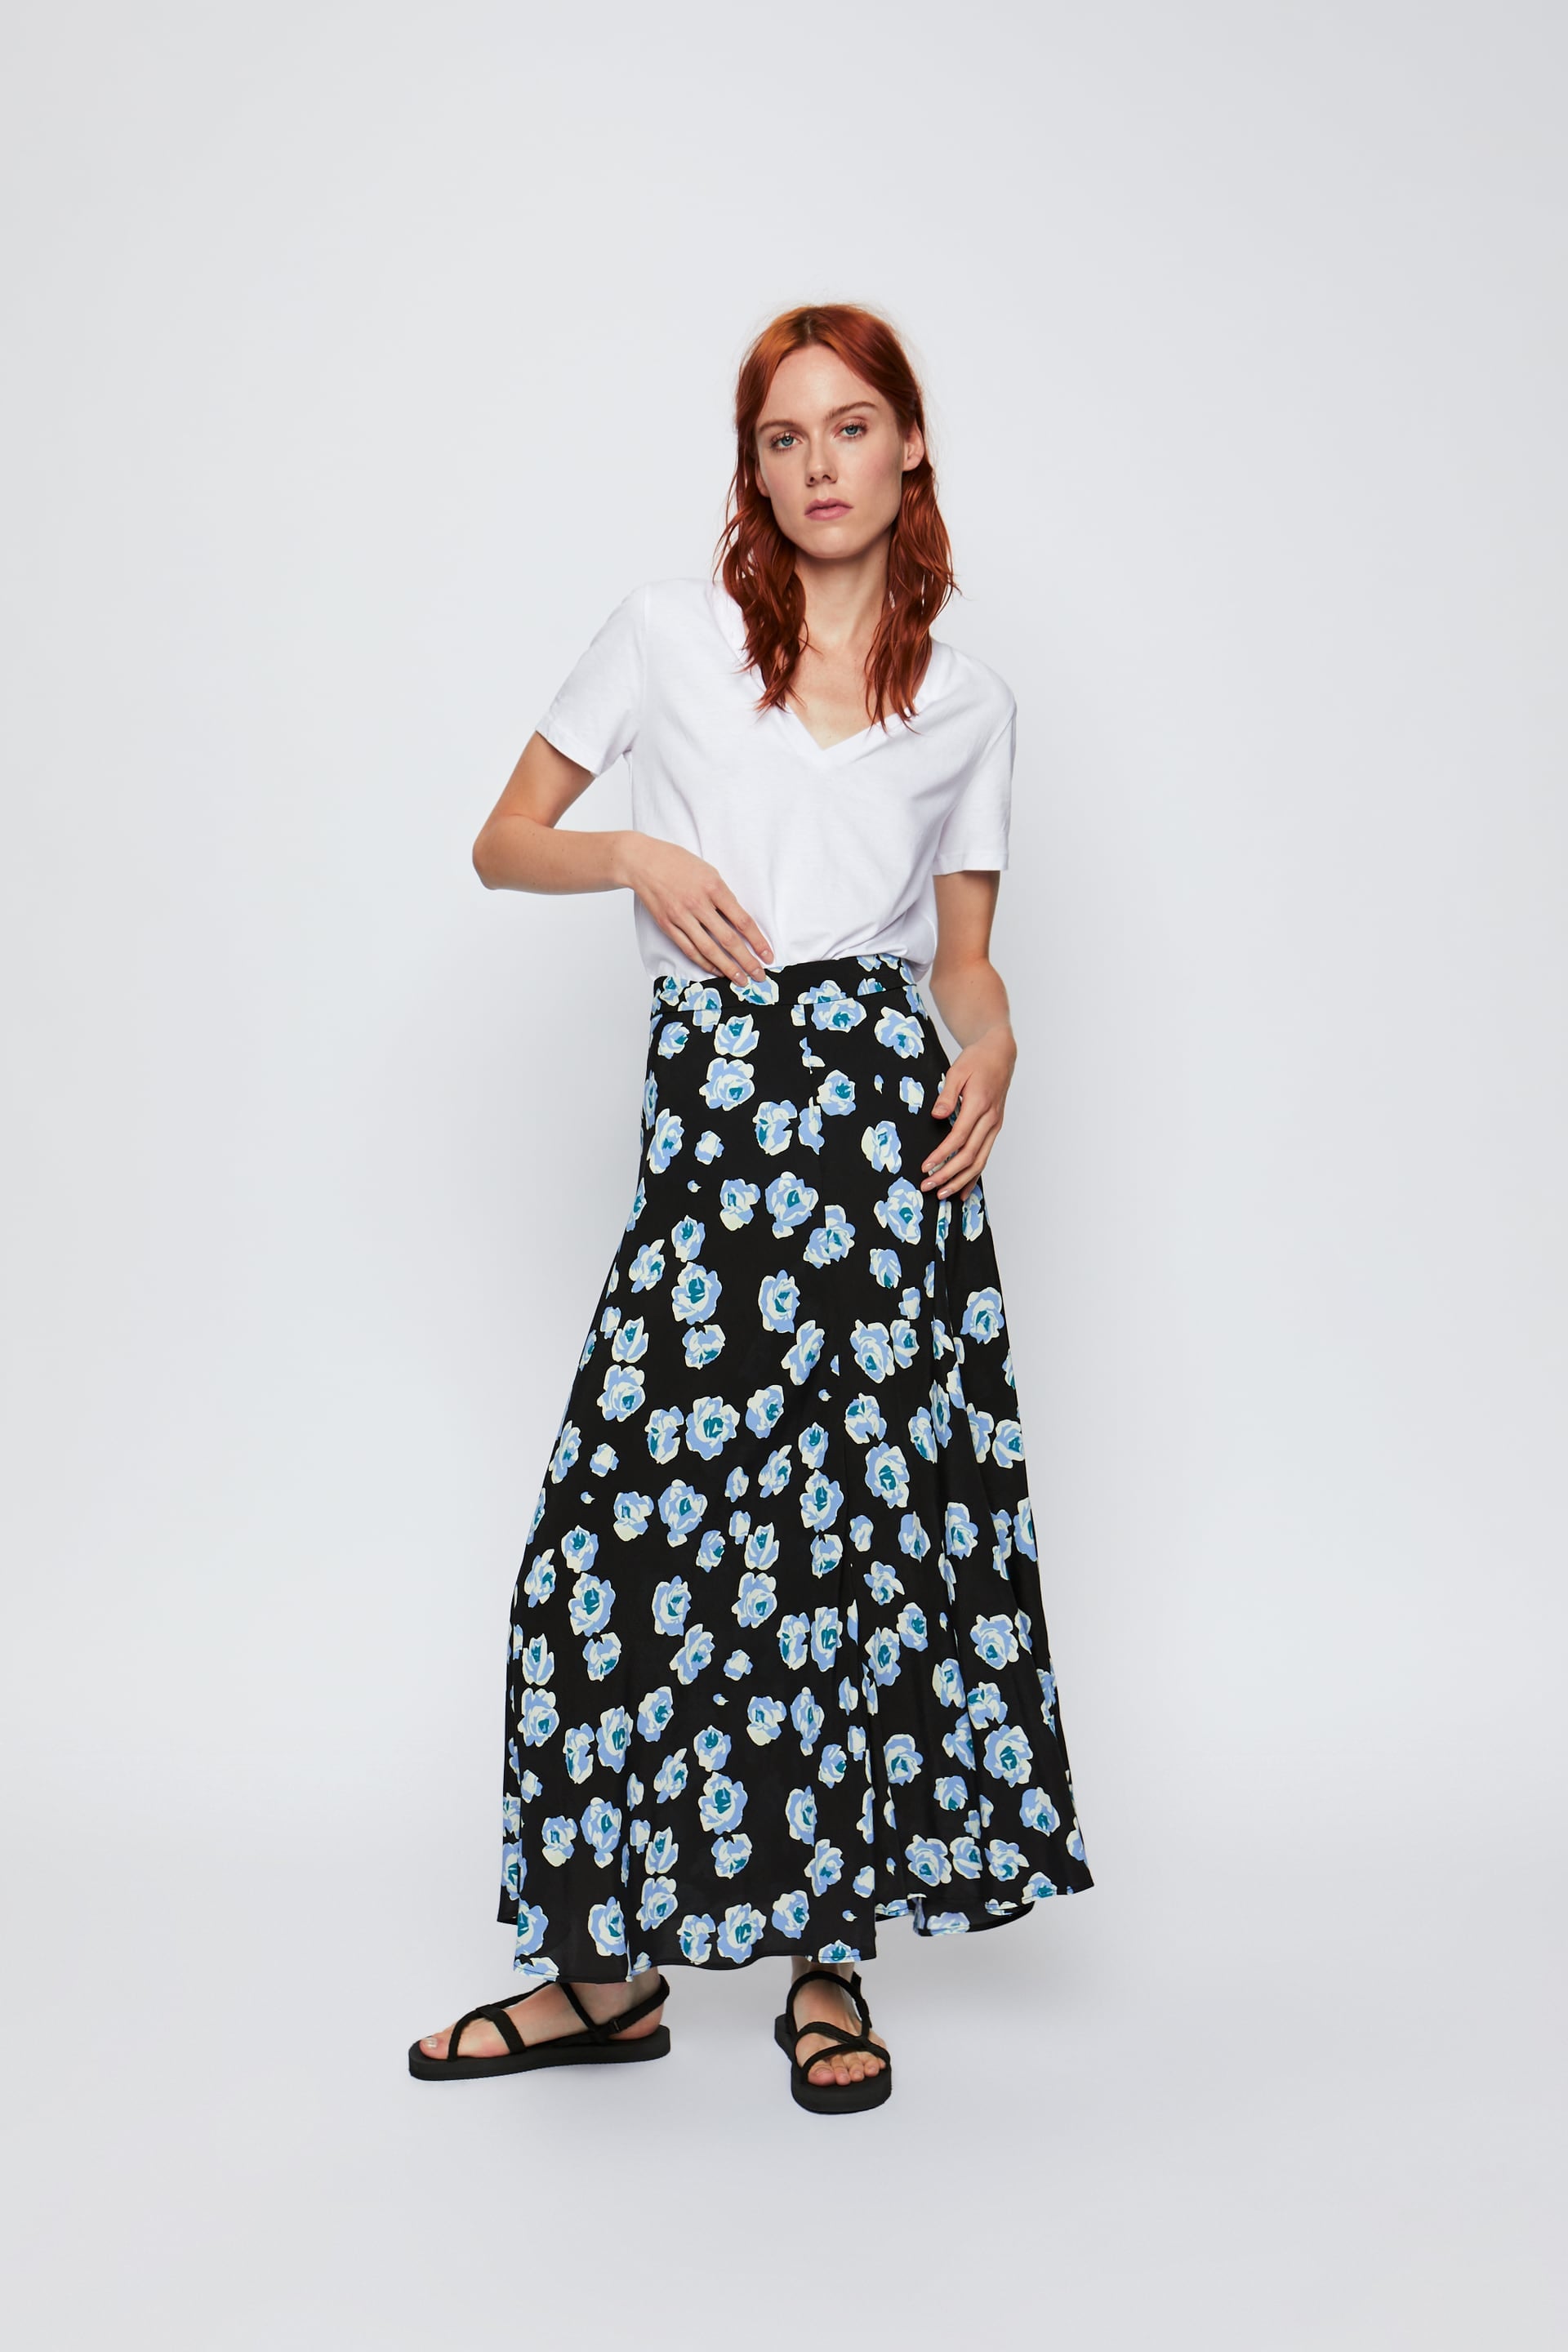 Zara Floral Midi Skirt | Our Editors 